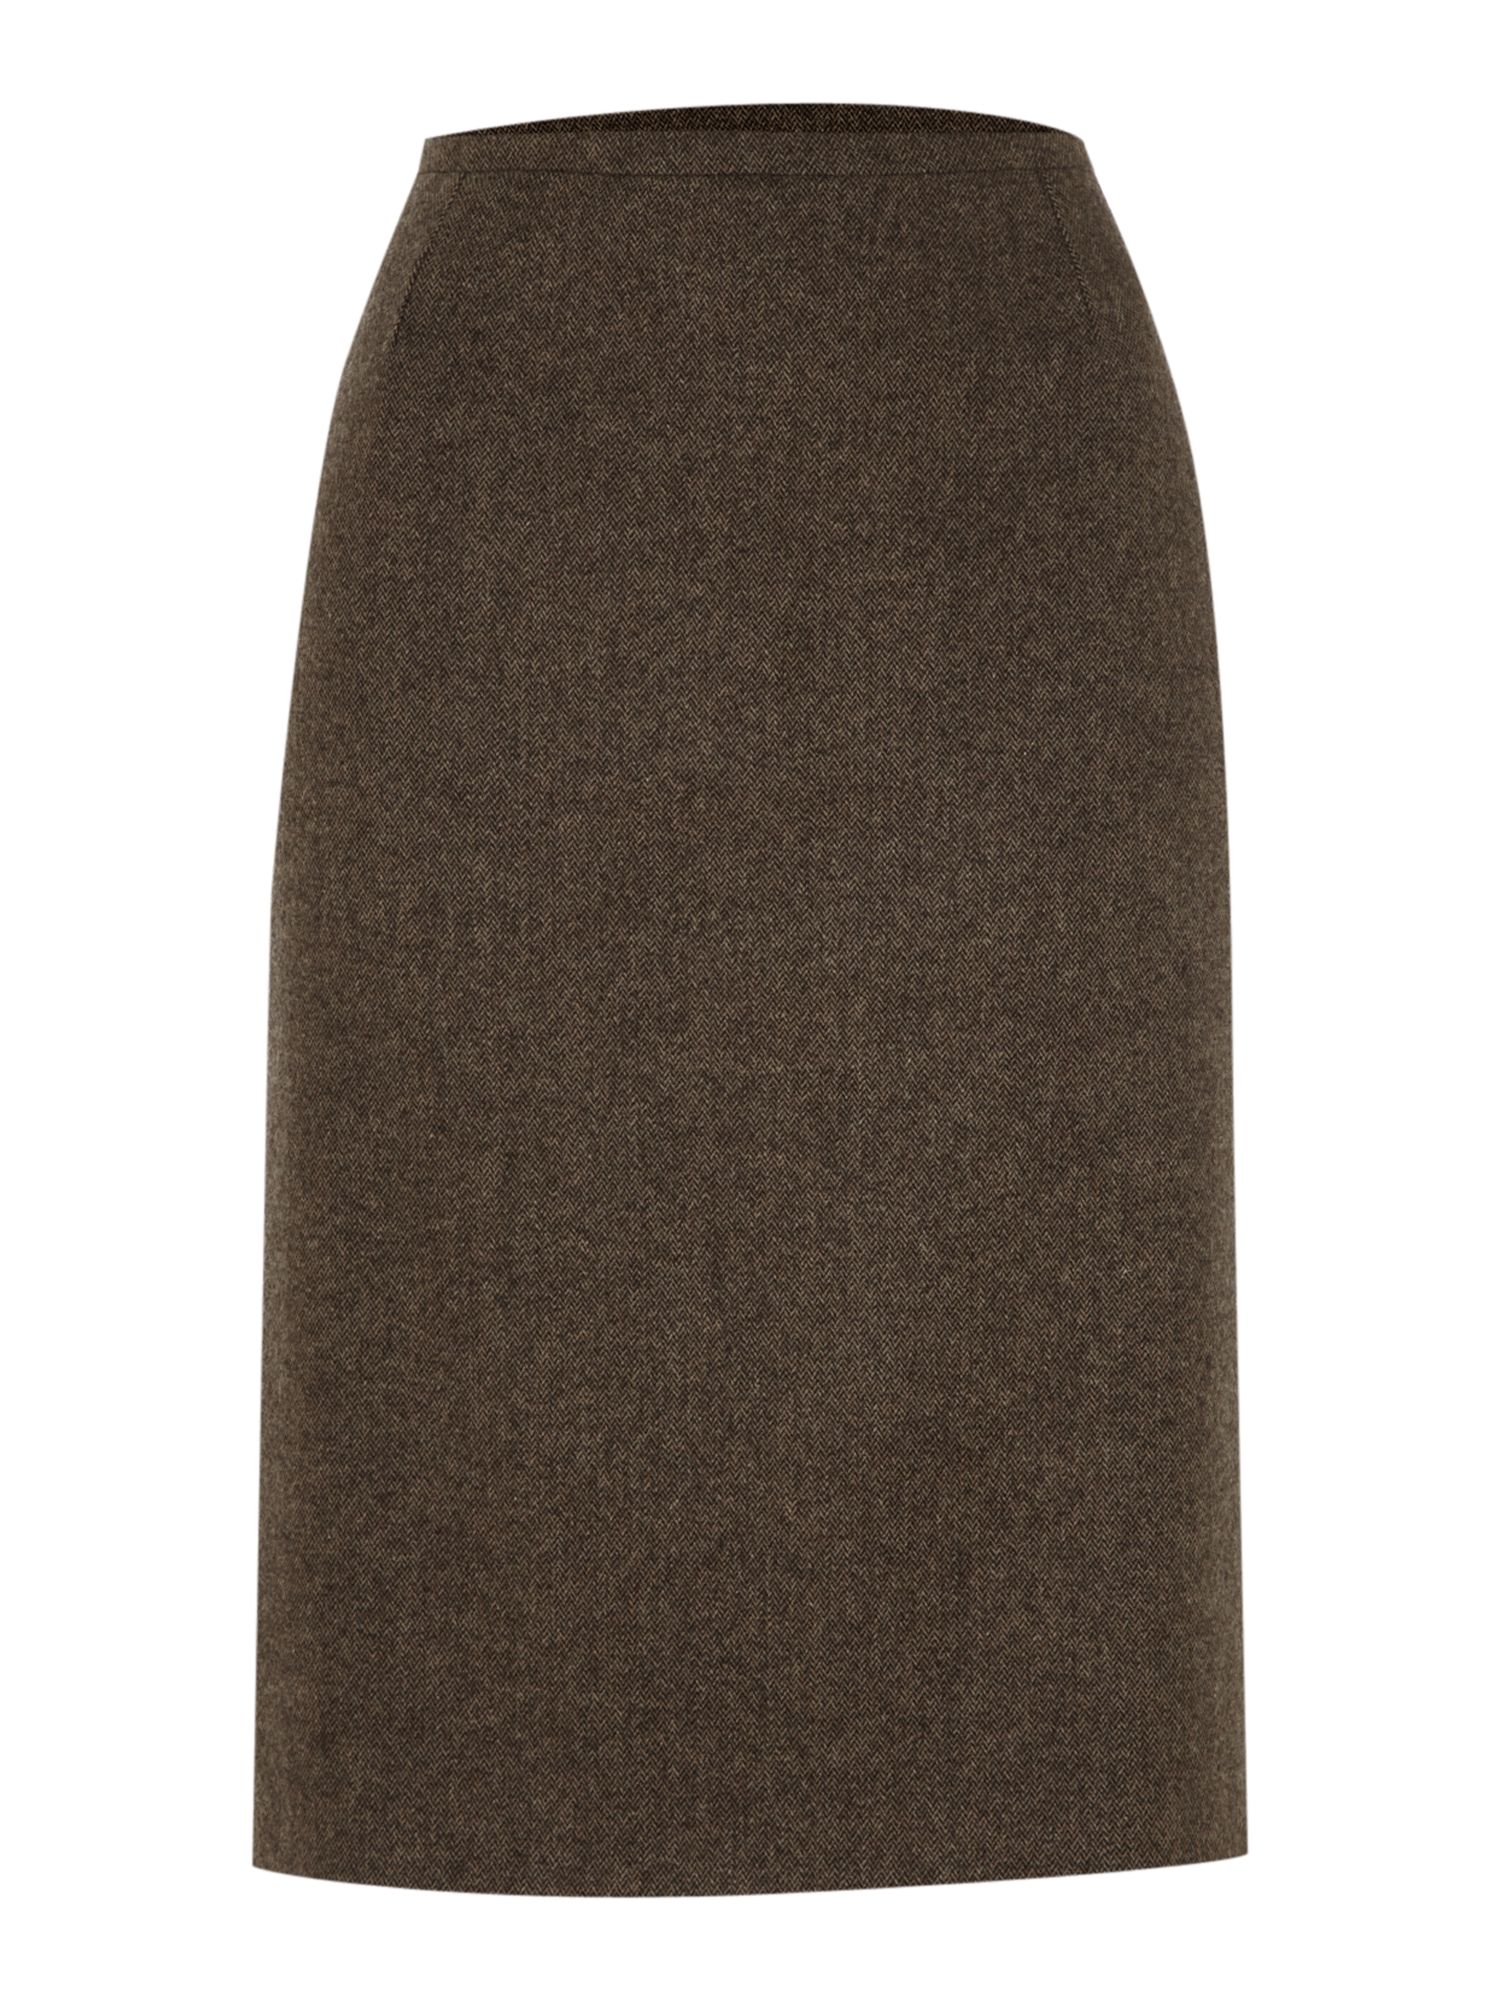 Max mara studio Sondalo Tweed Pencil Skirt in Brown | Lyst